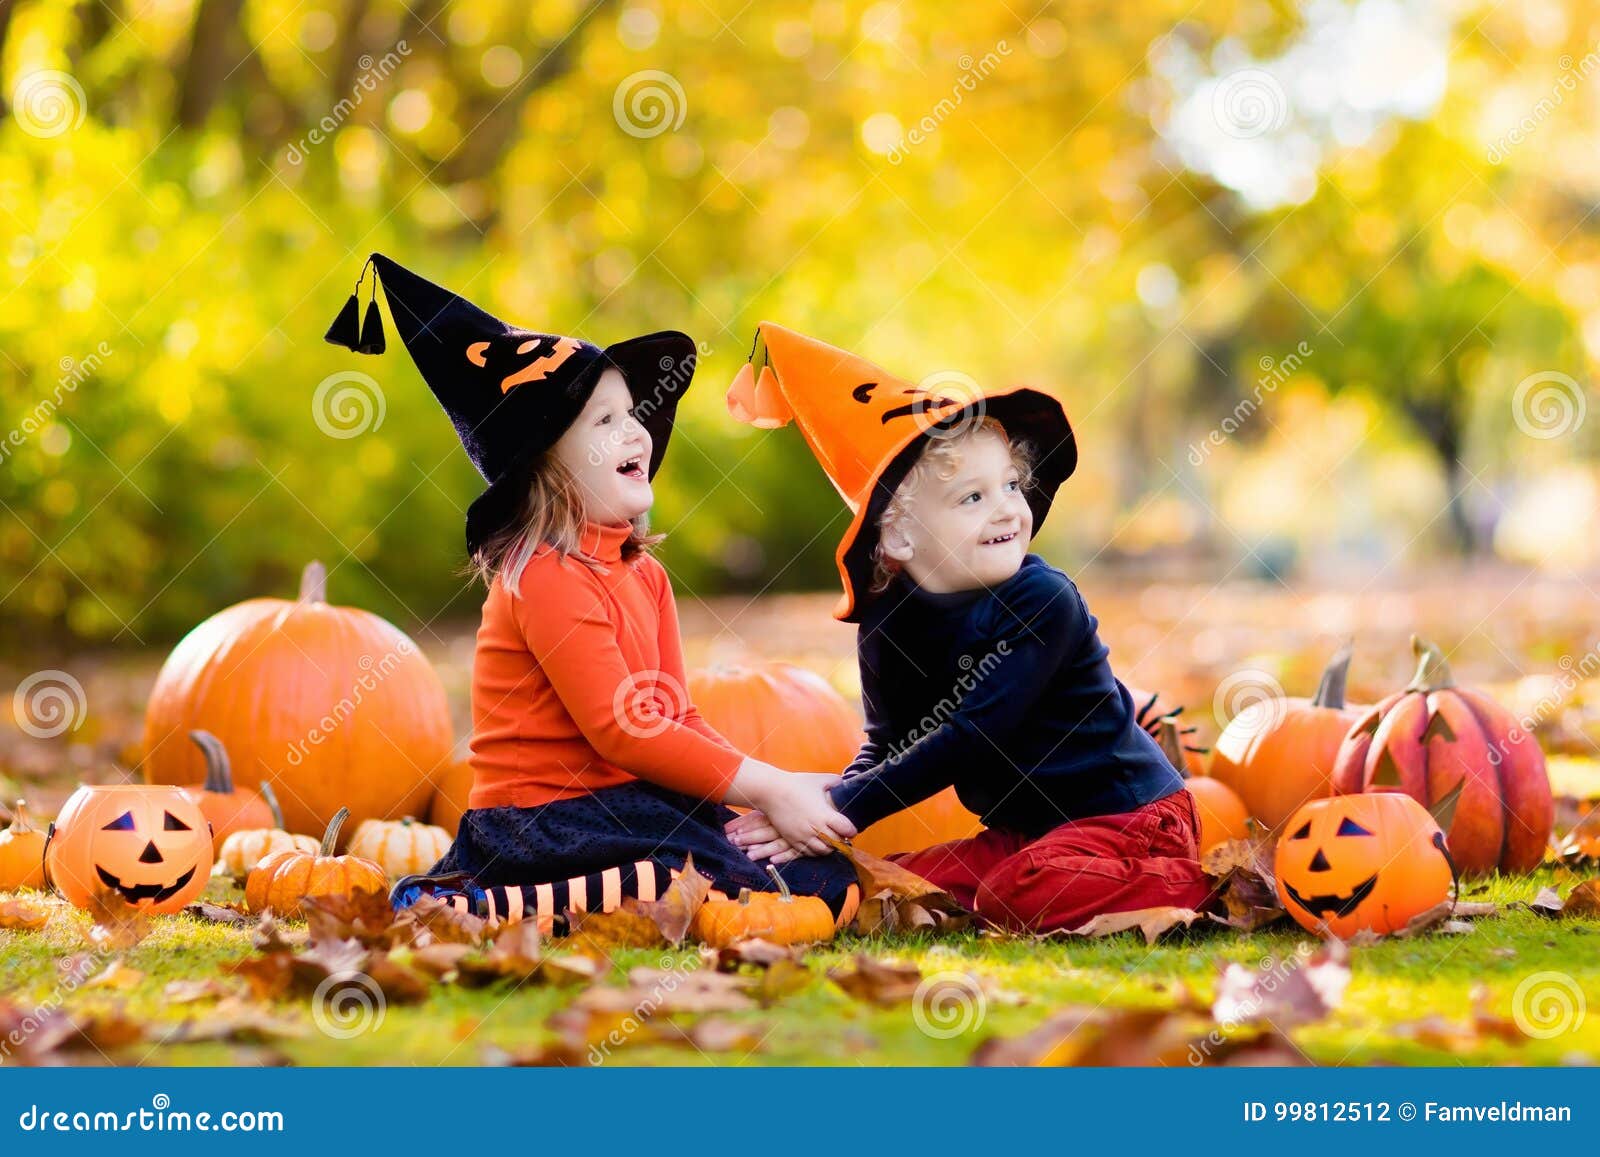 Kids with Pumpkins in Halloween Costumes Stock Photo - Image of orange ...